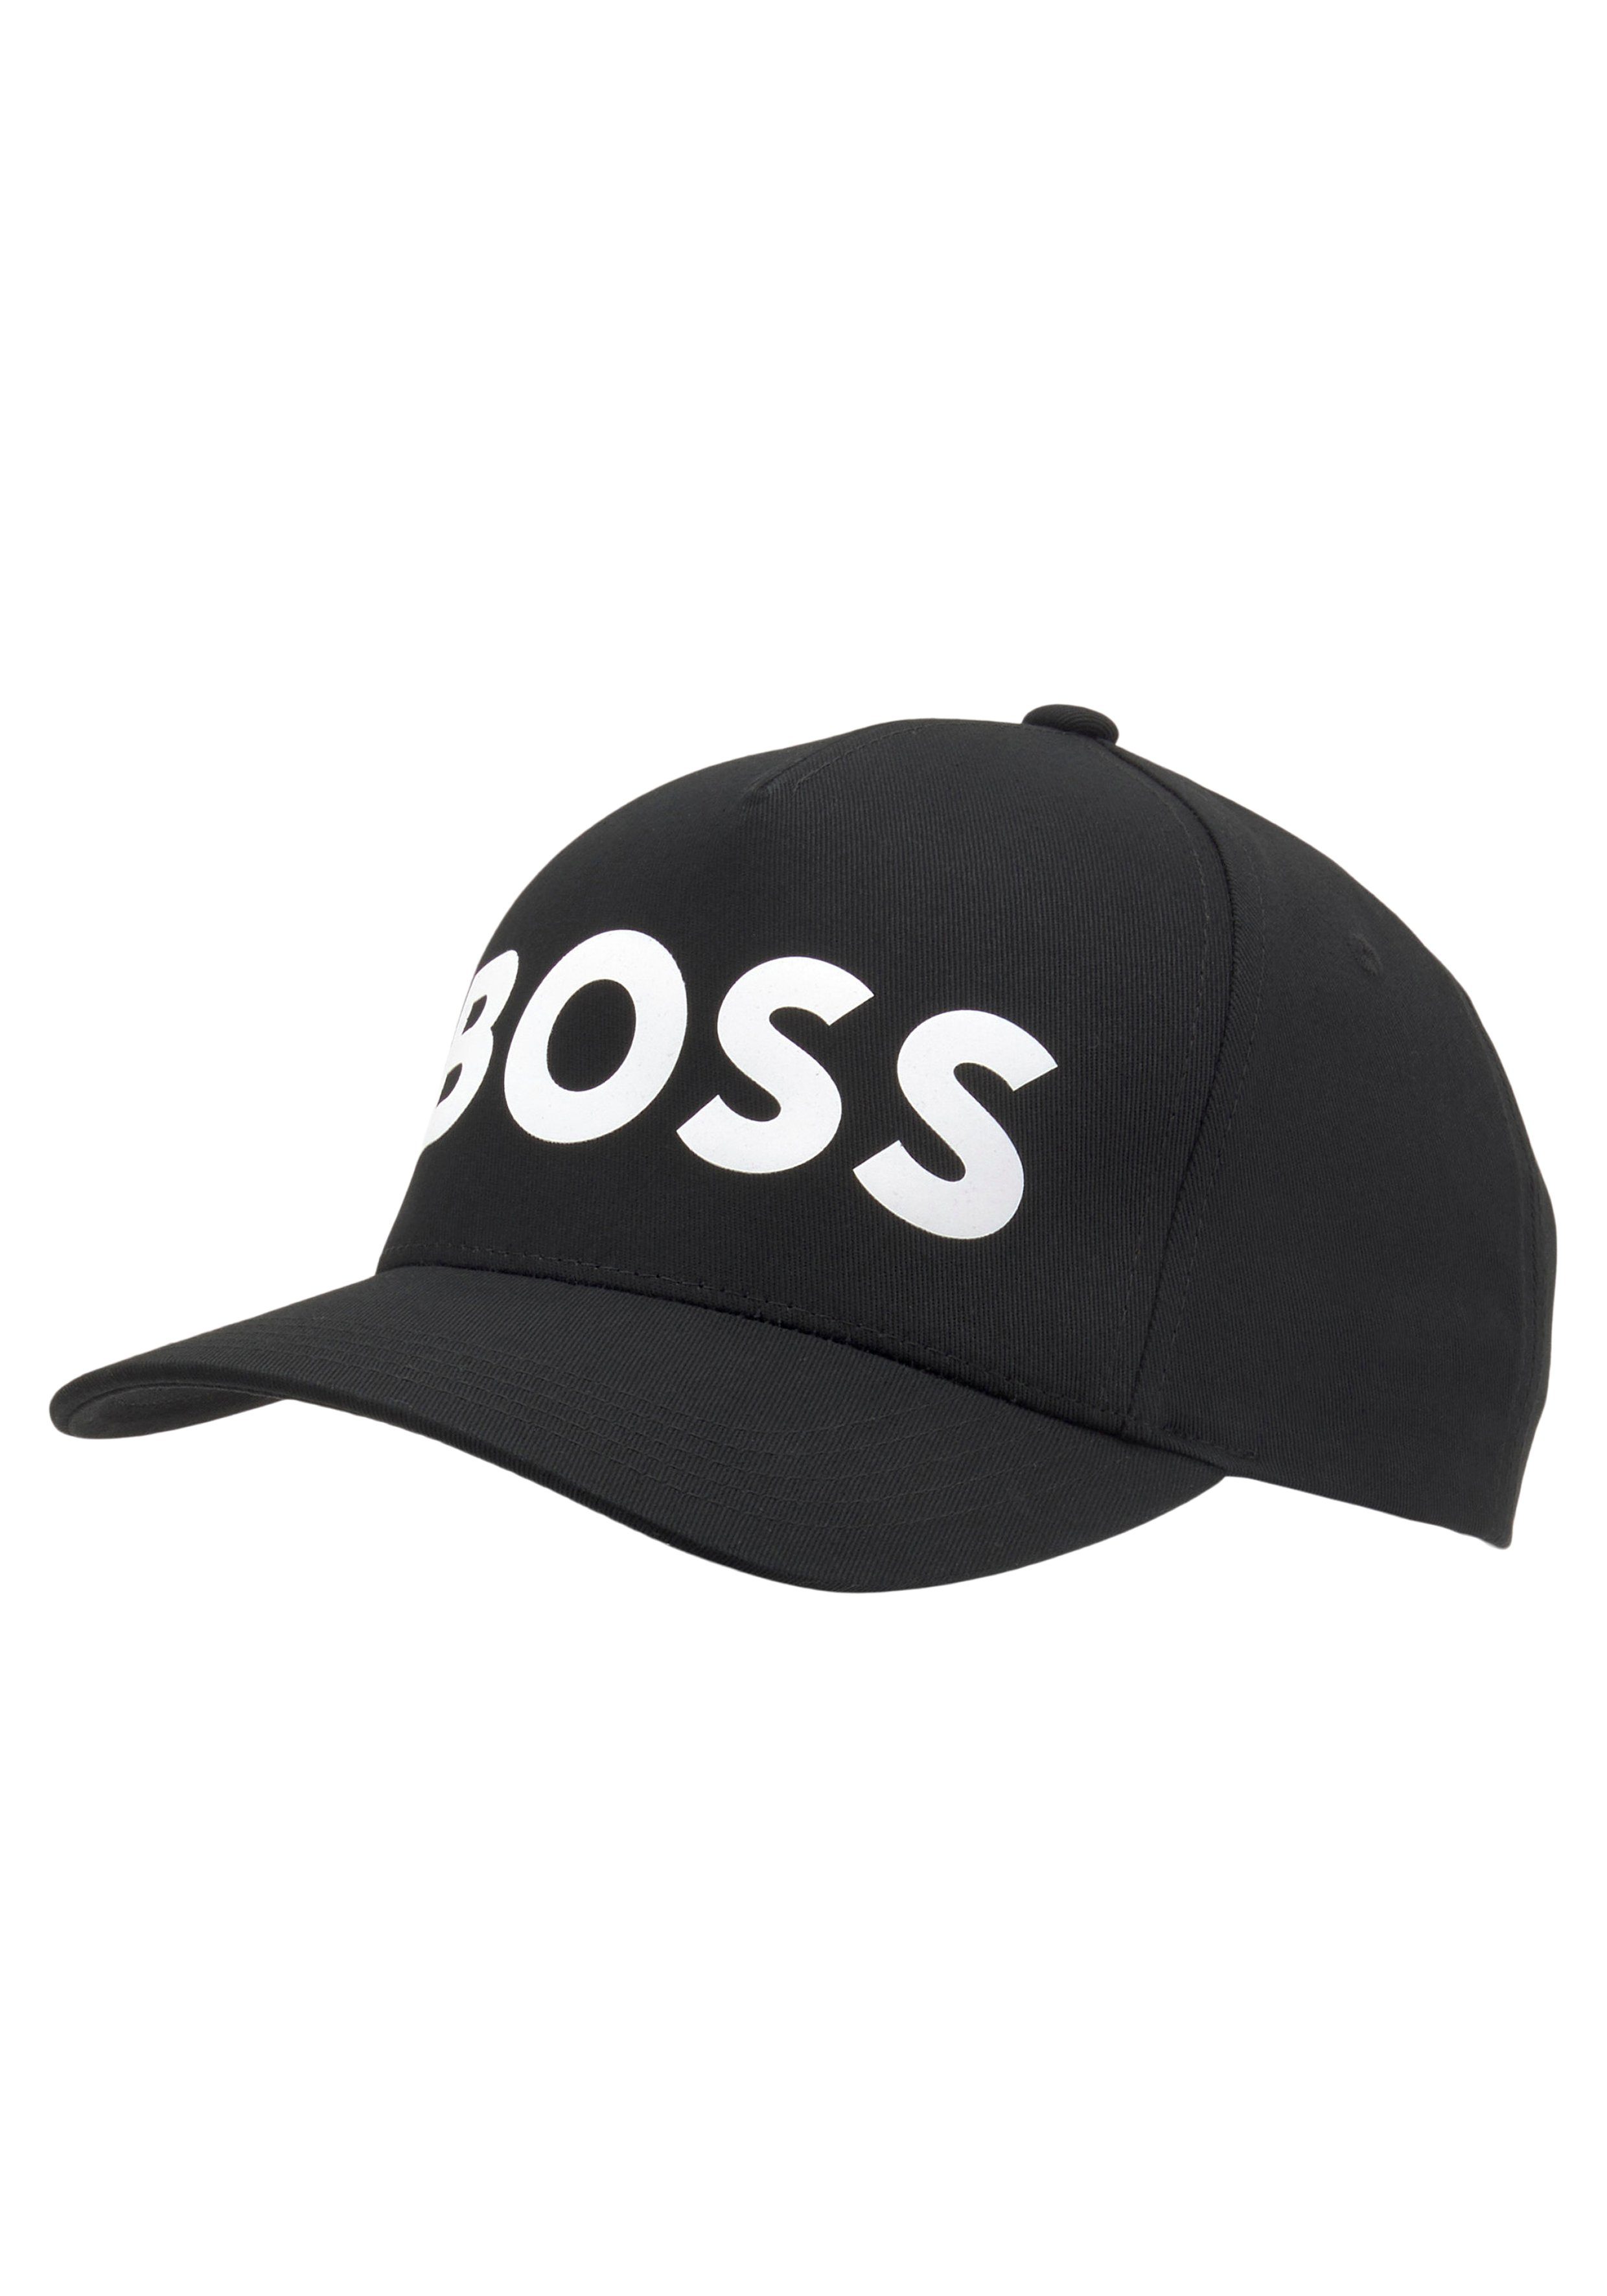 Baseball ideal Logodruck, Rundet BOSS Outfit Cap mit ab Sevile-BOSS-5 jedes